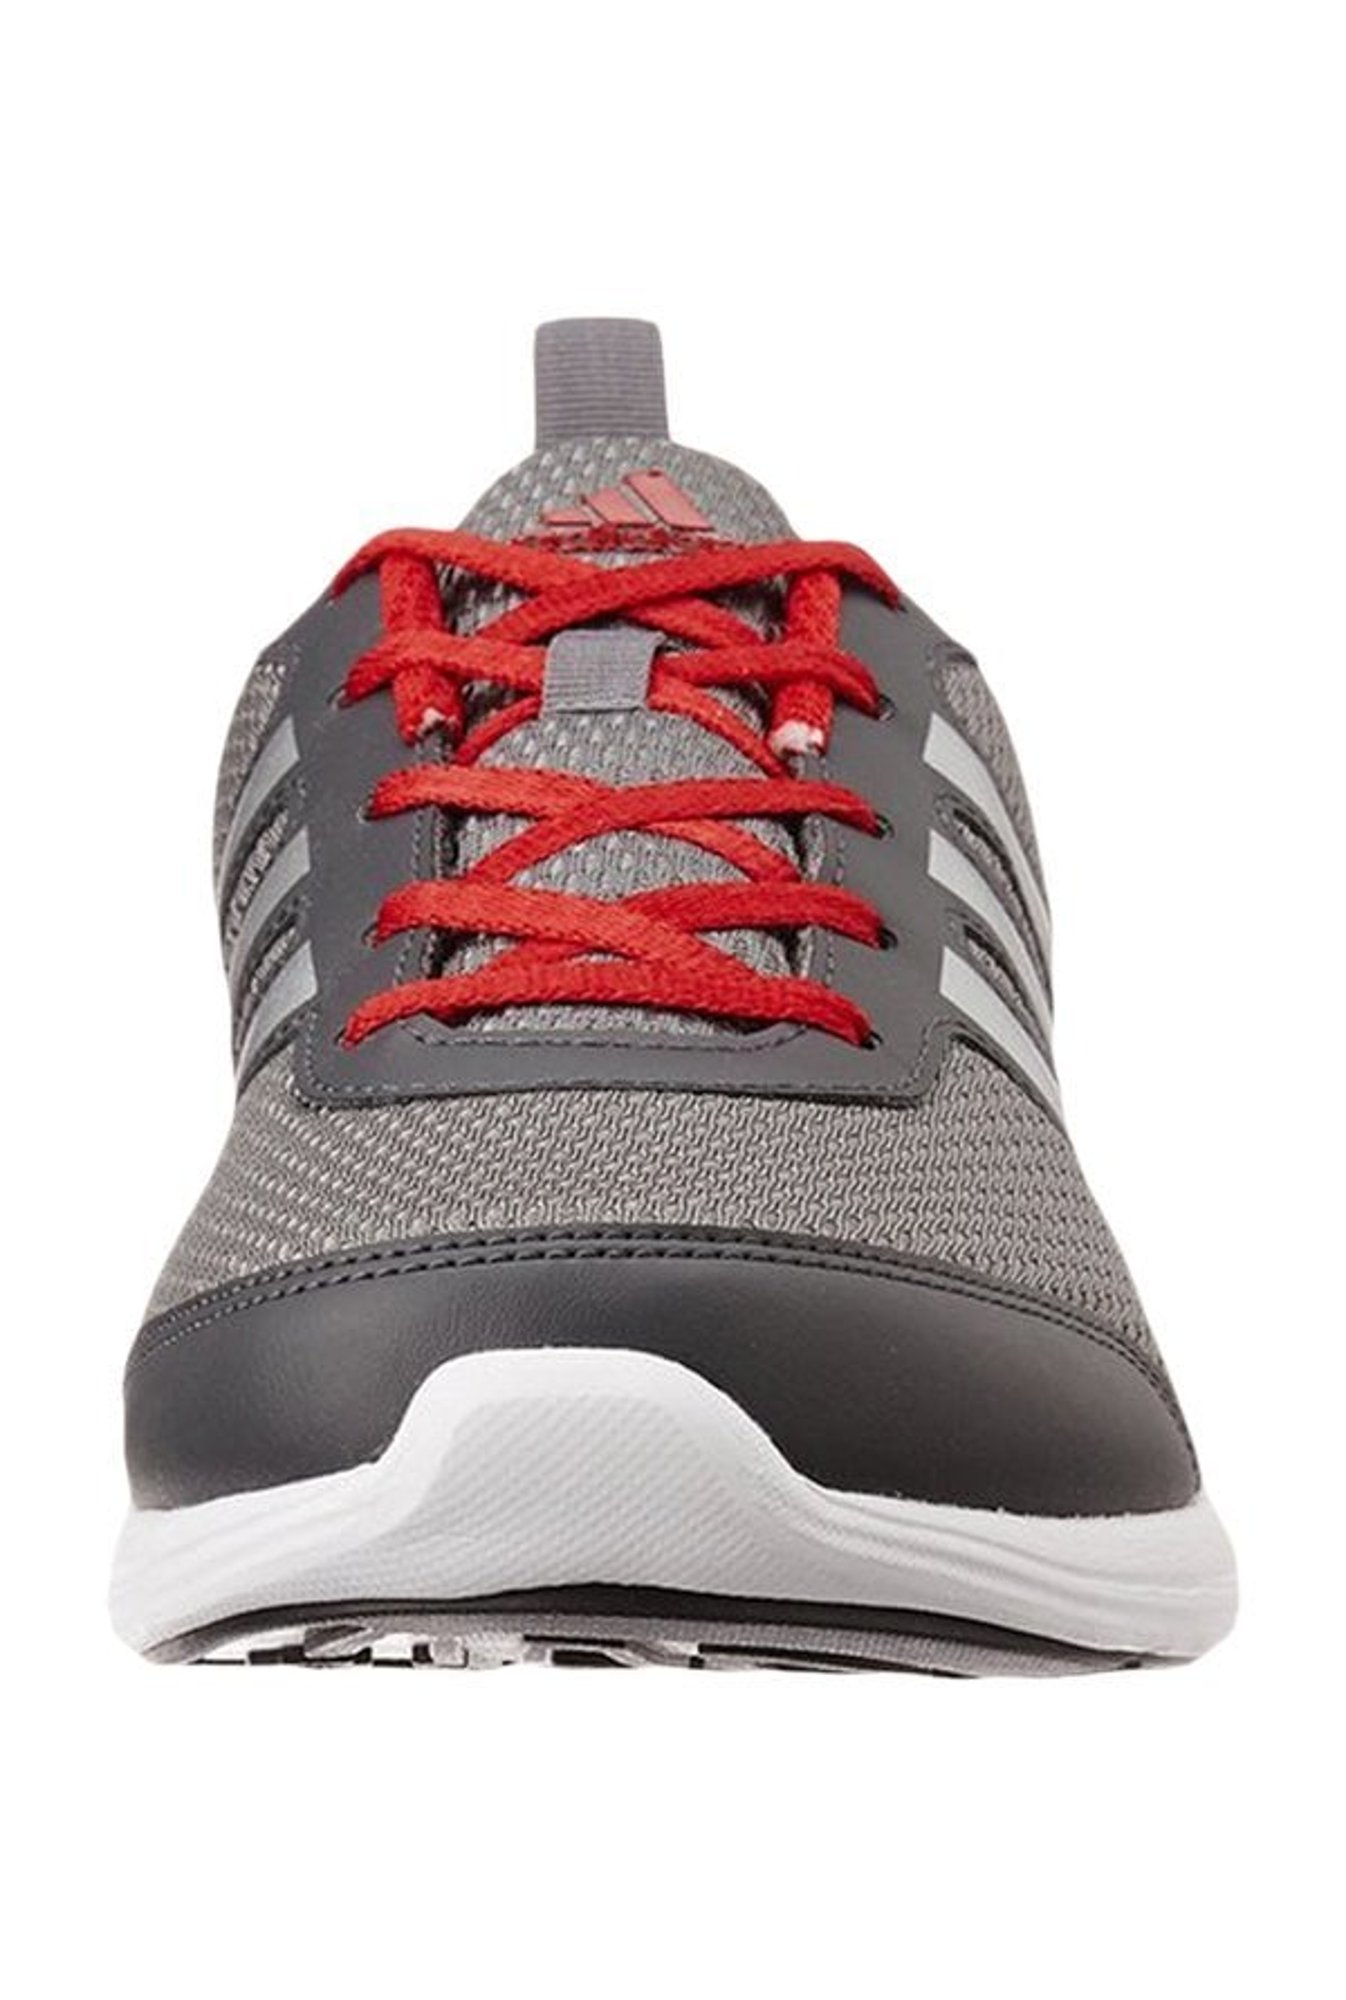 Adidas Yking Grey \u0026 Red Running Shoes 